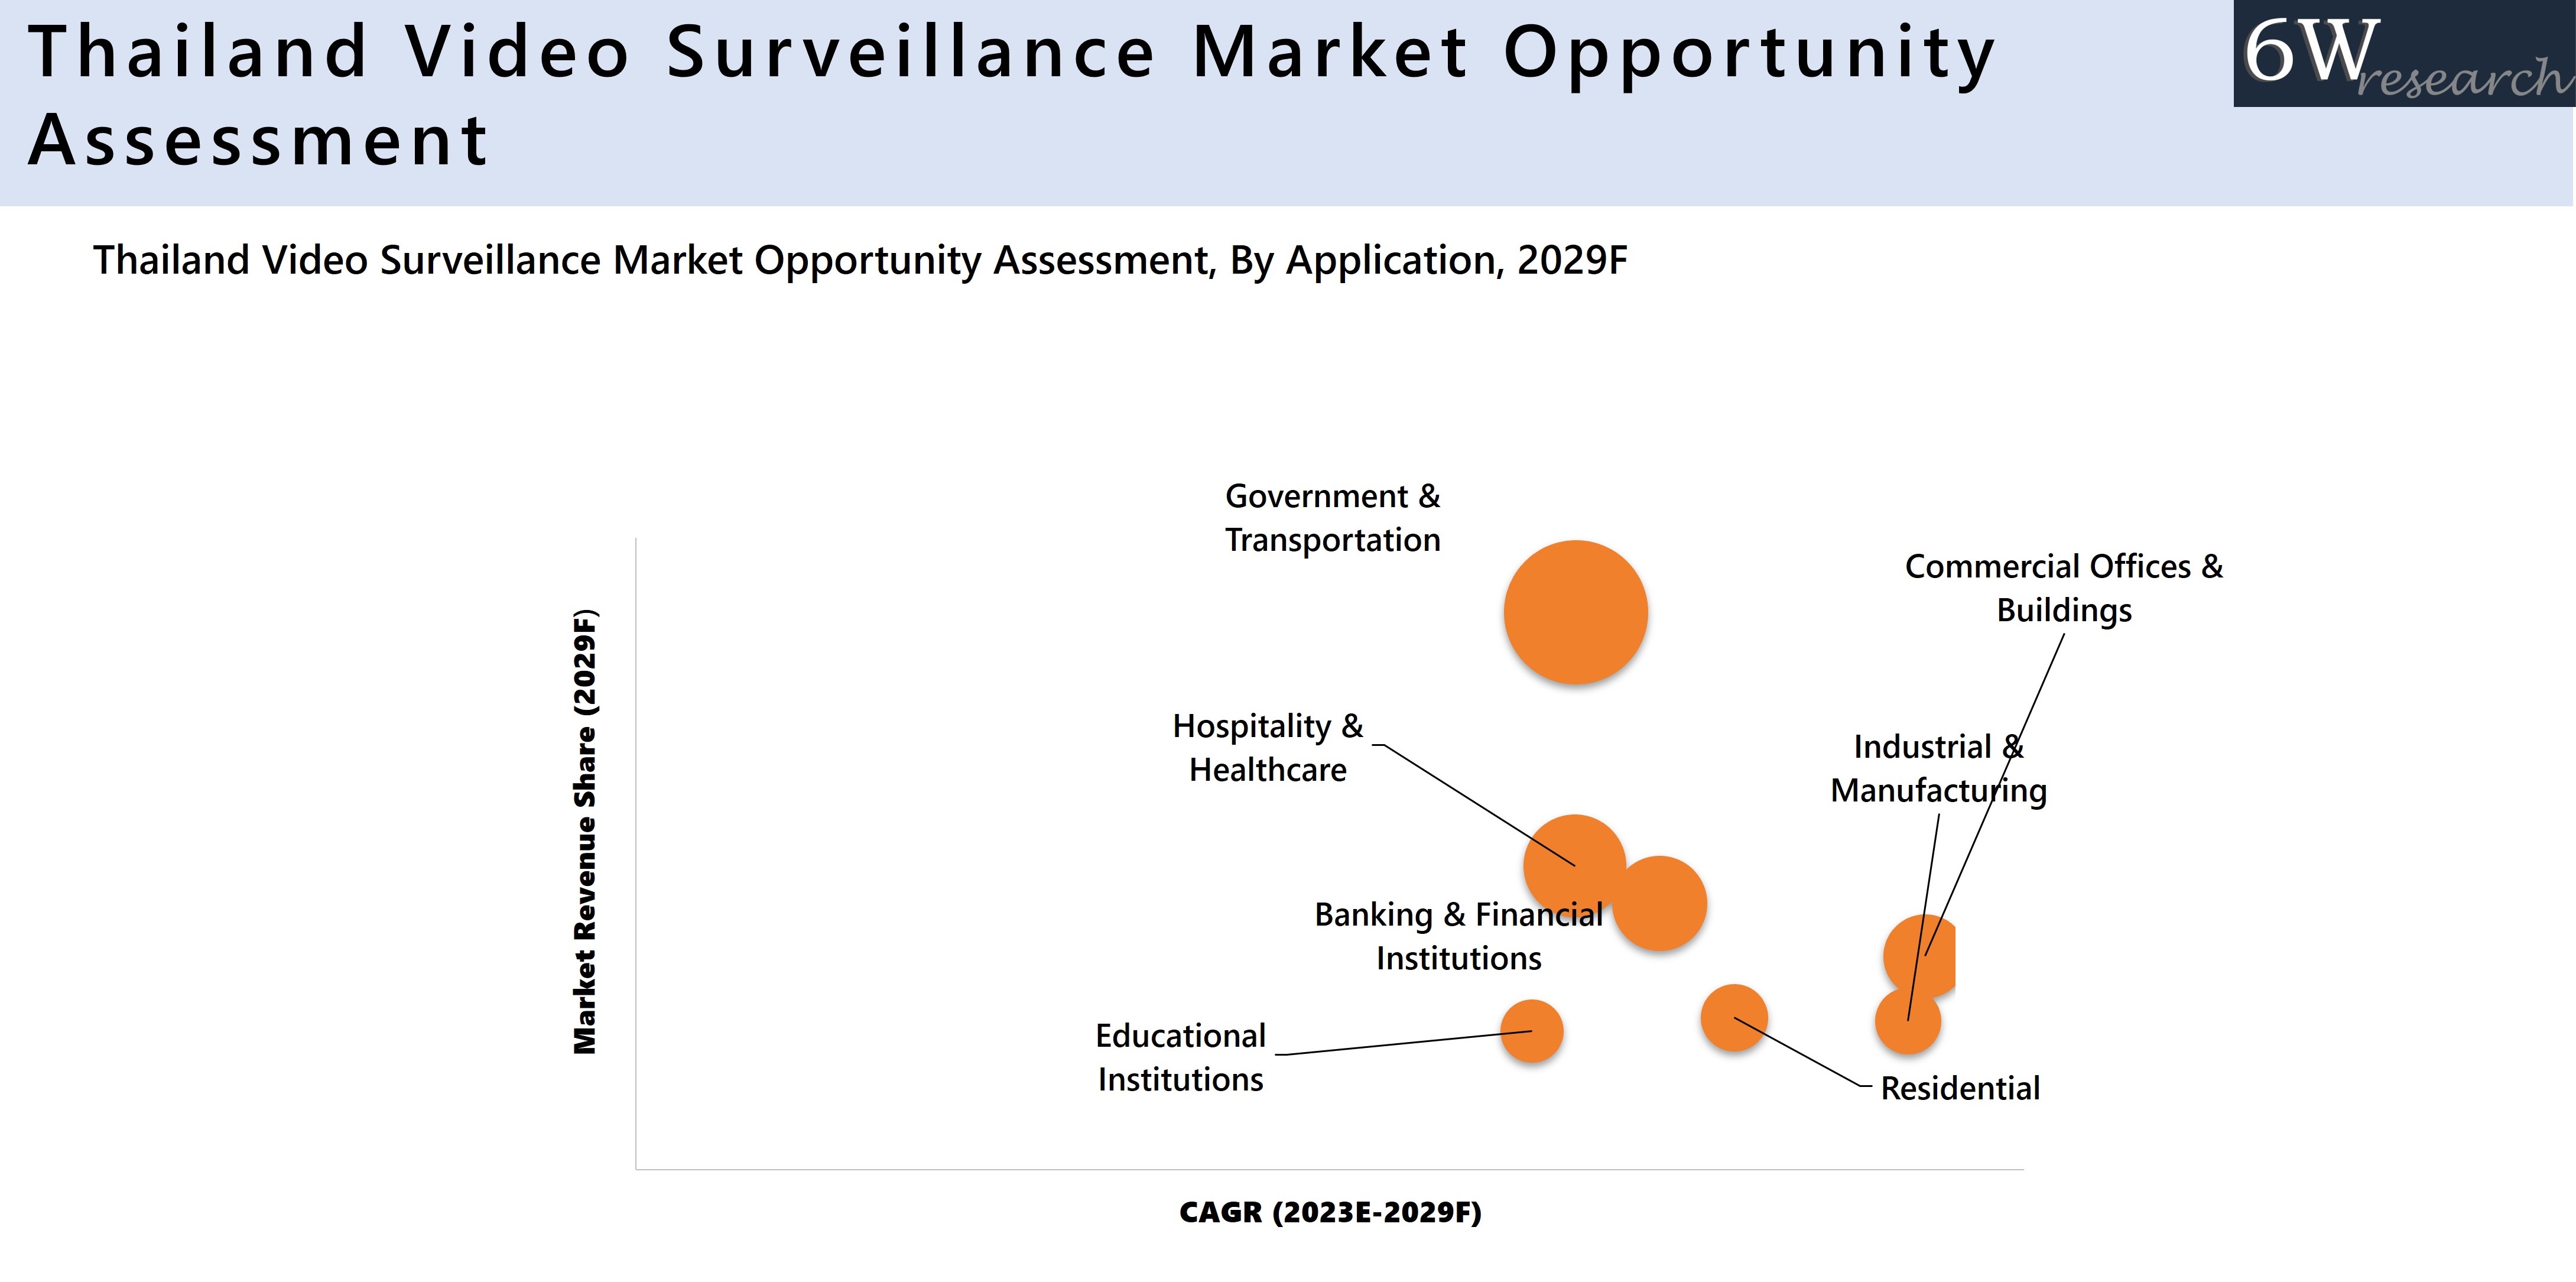 Thailand Video Surveillance Market Opportunity Assessment